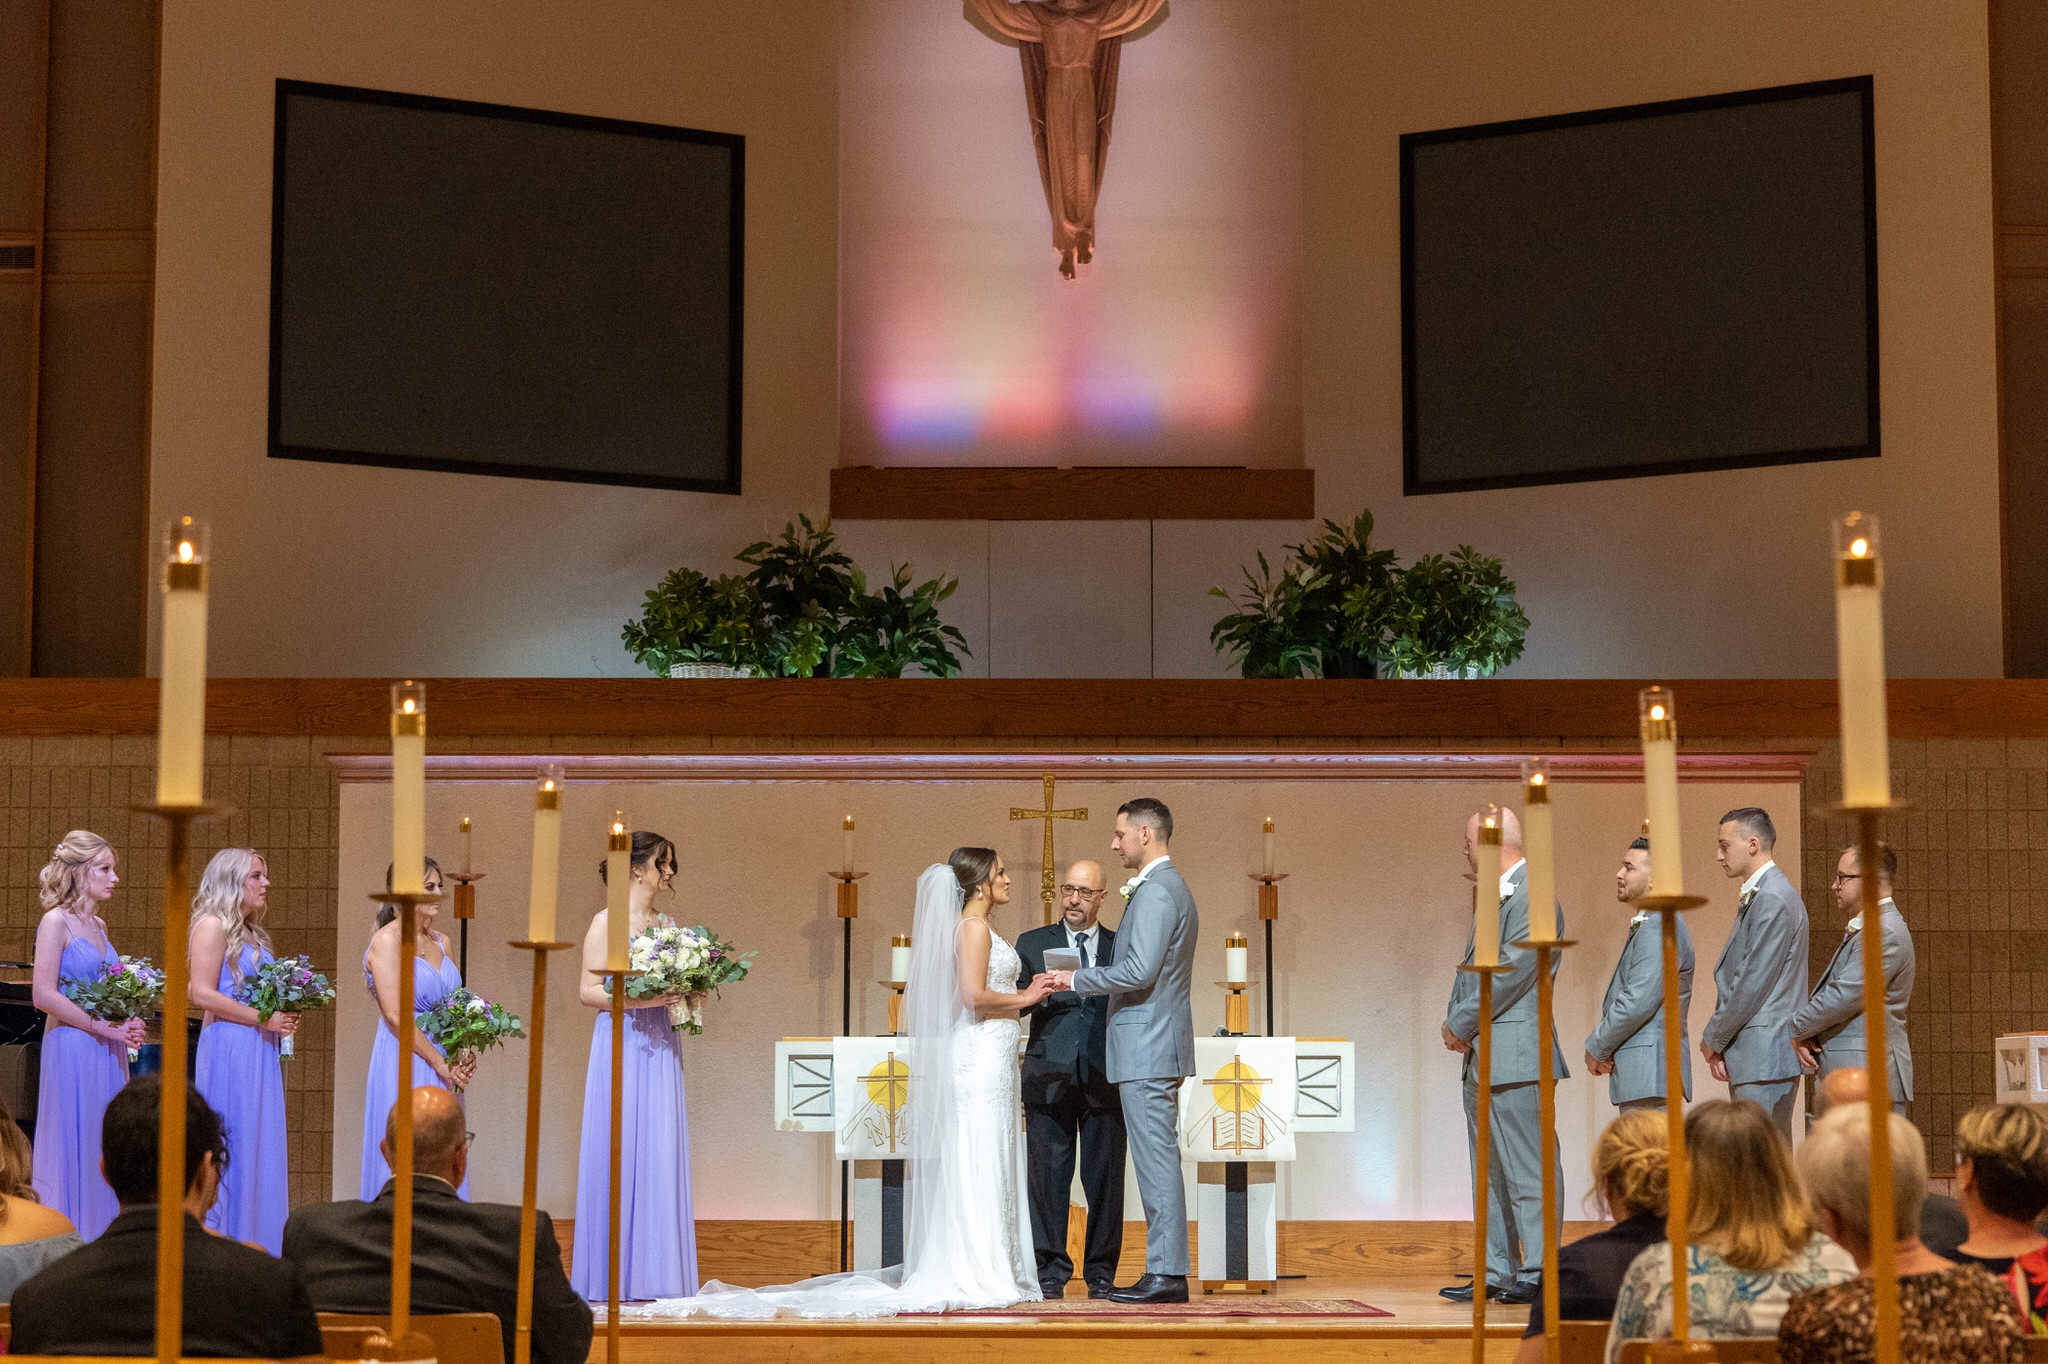  immanuel lutheran church wedding